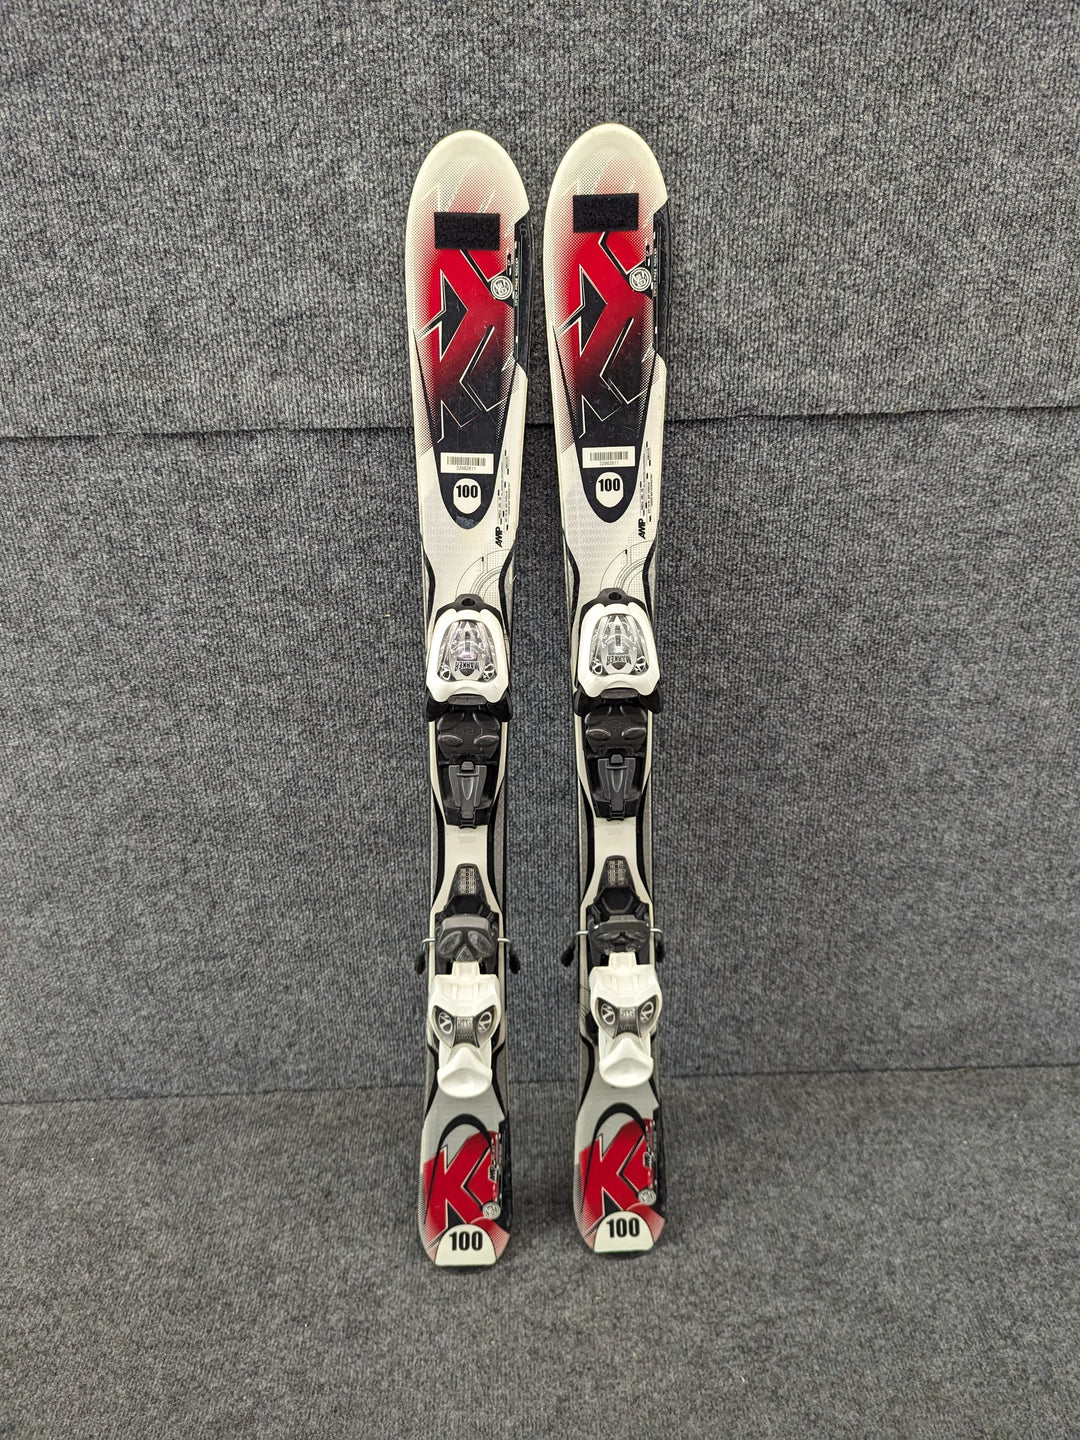 K2 Length 100 cm/39.5" Alpine Skis